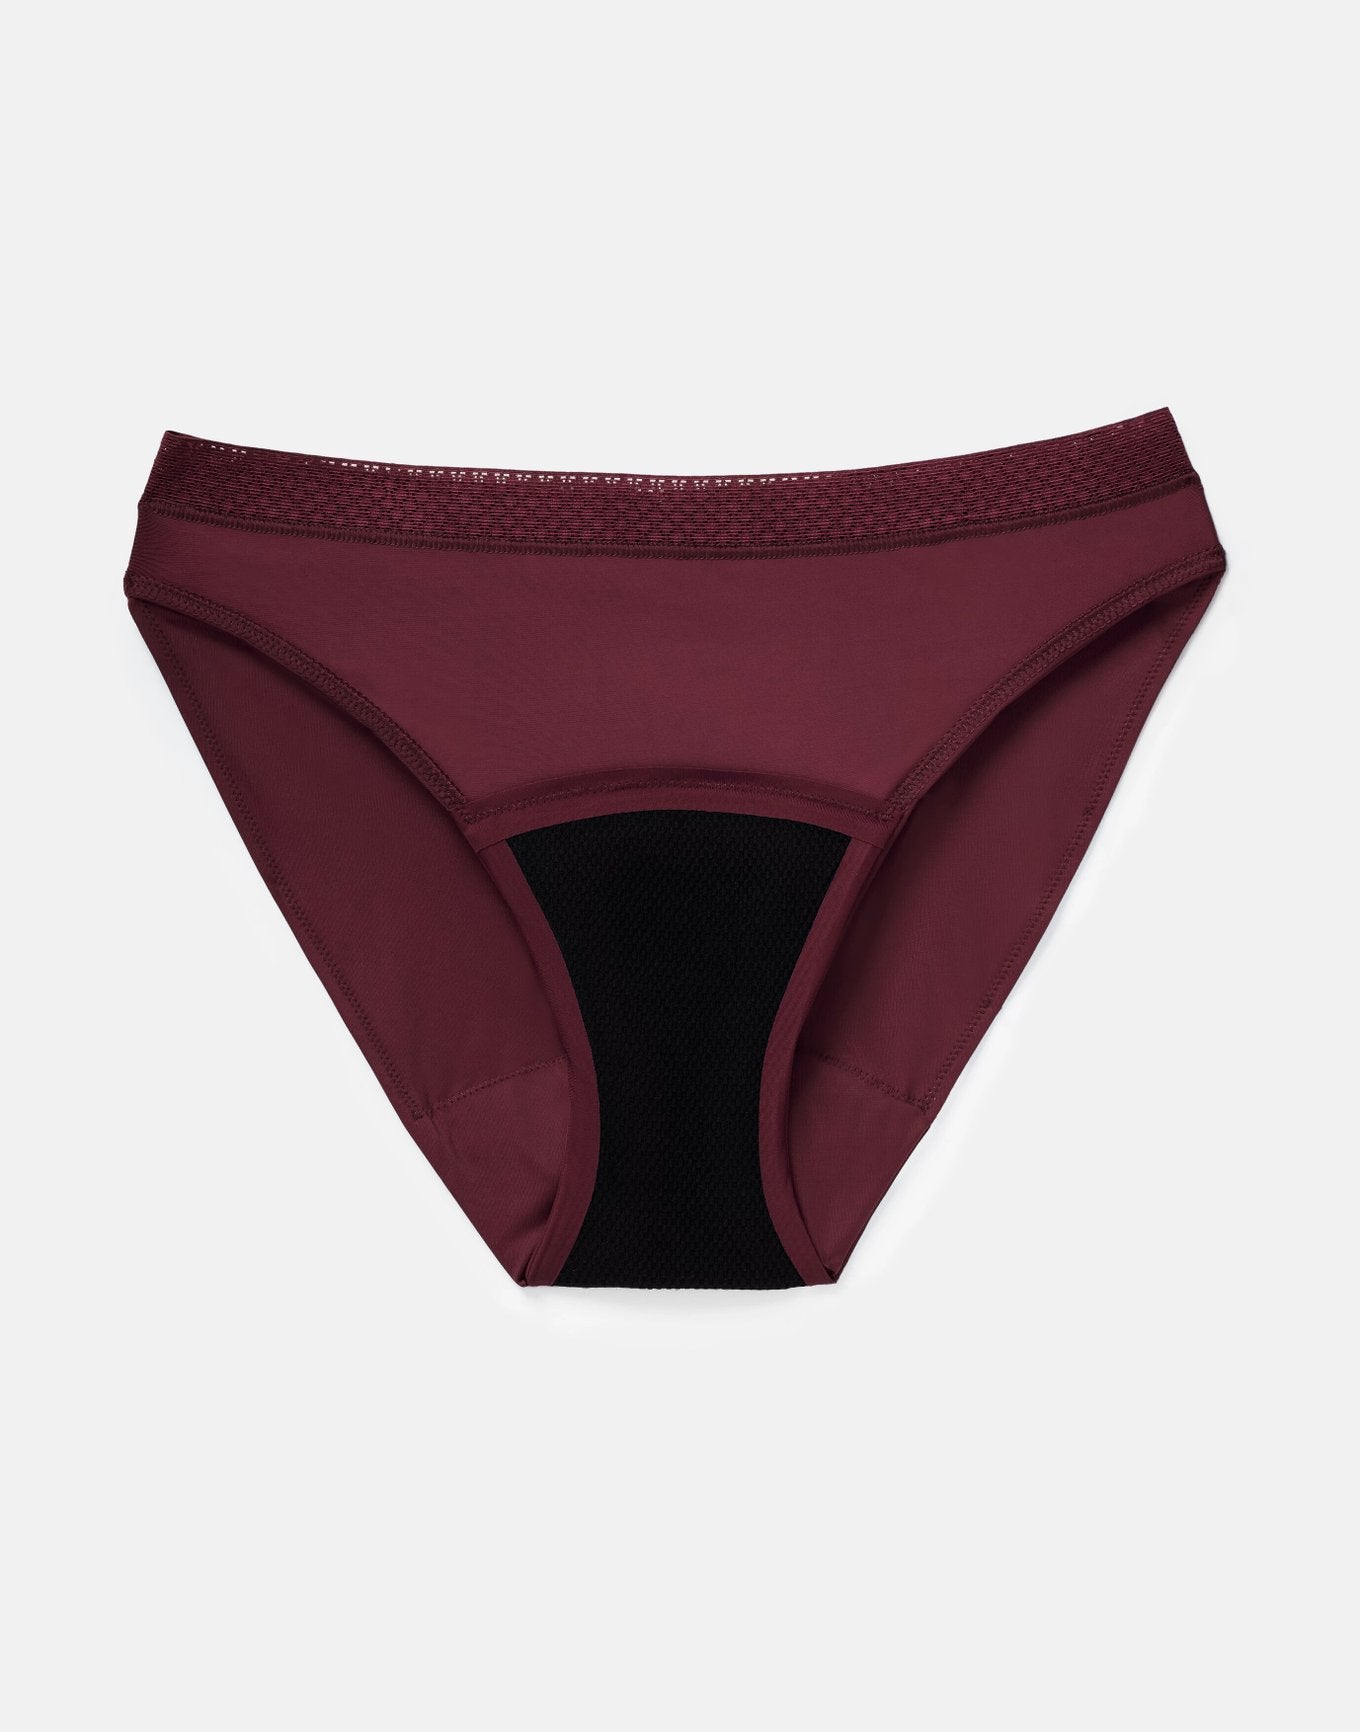 Joyja Katelin period-proof panty in color Windsor Wine and shape bikini